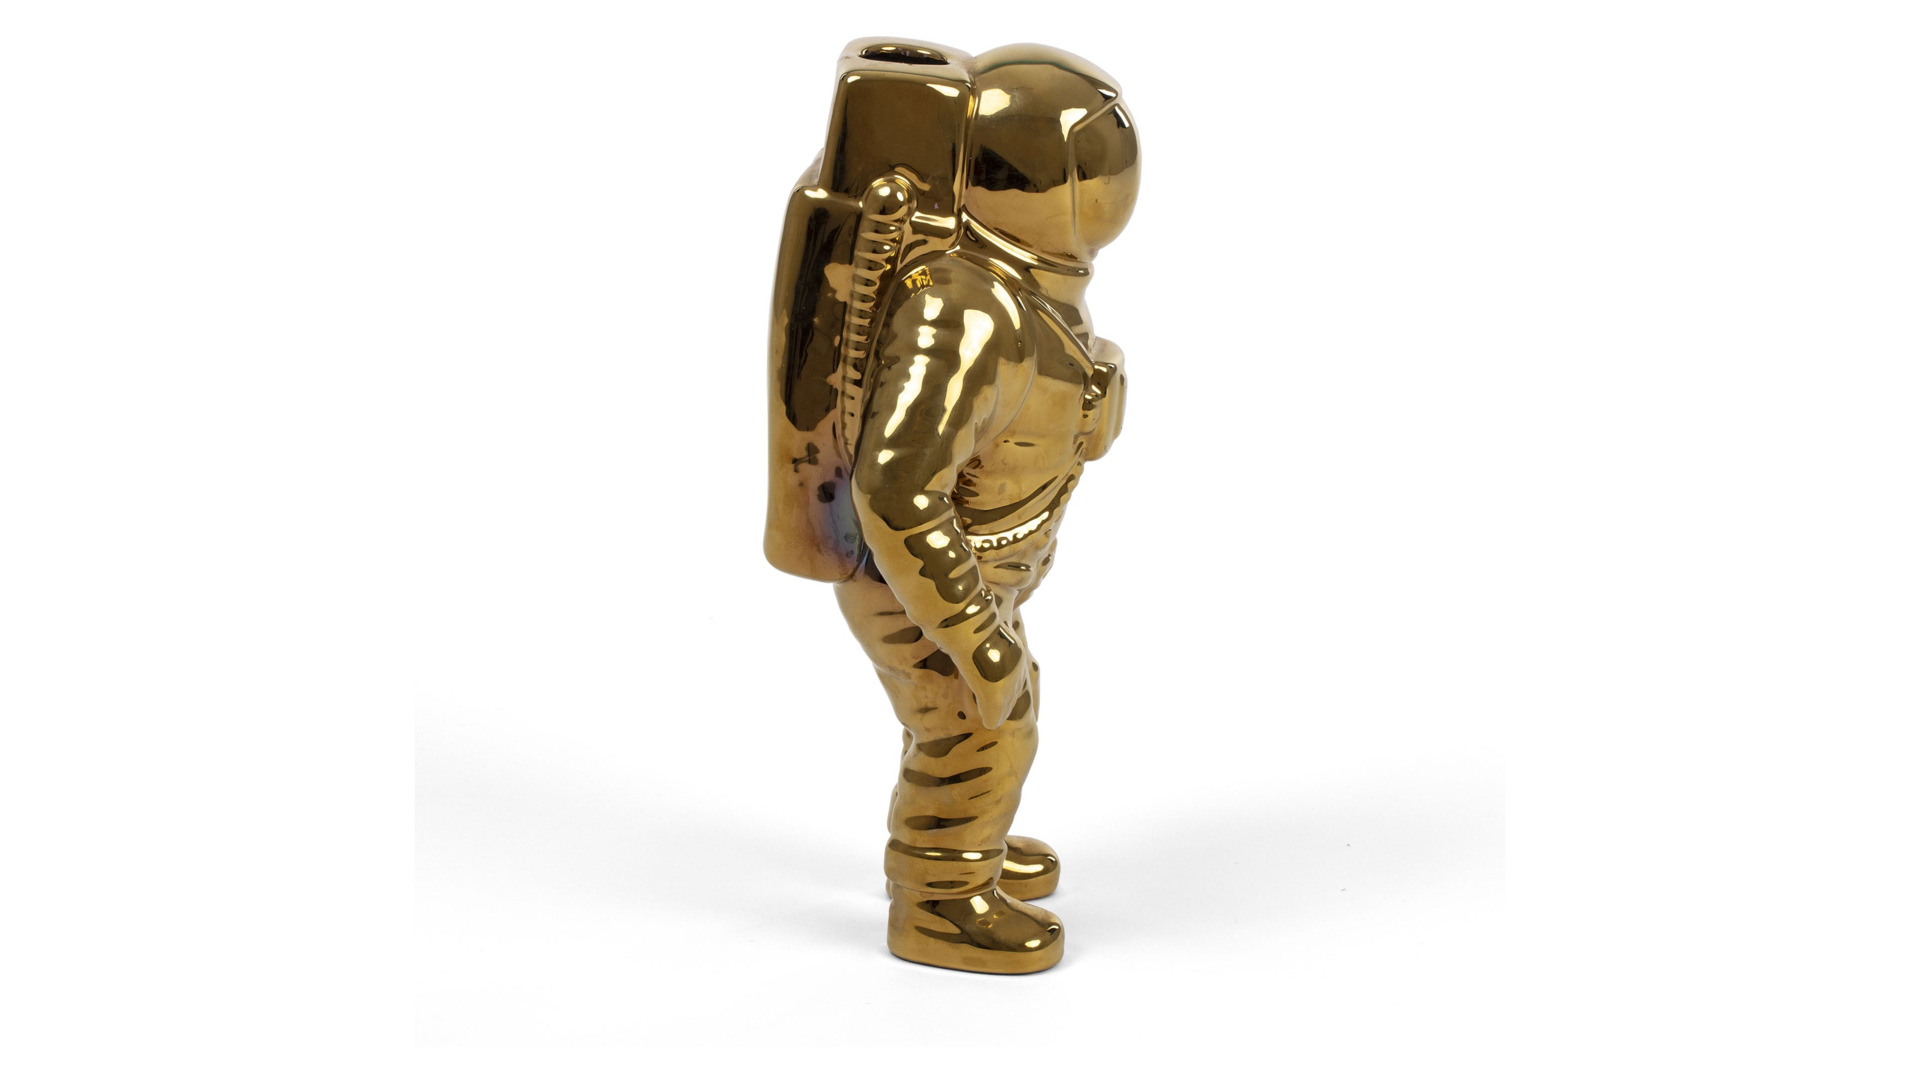 Ваза Seletti Космос Космонавт 28 см, золотистая